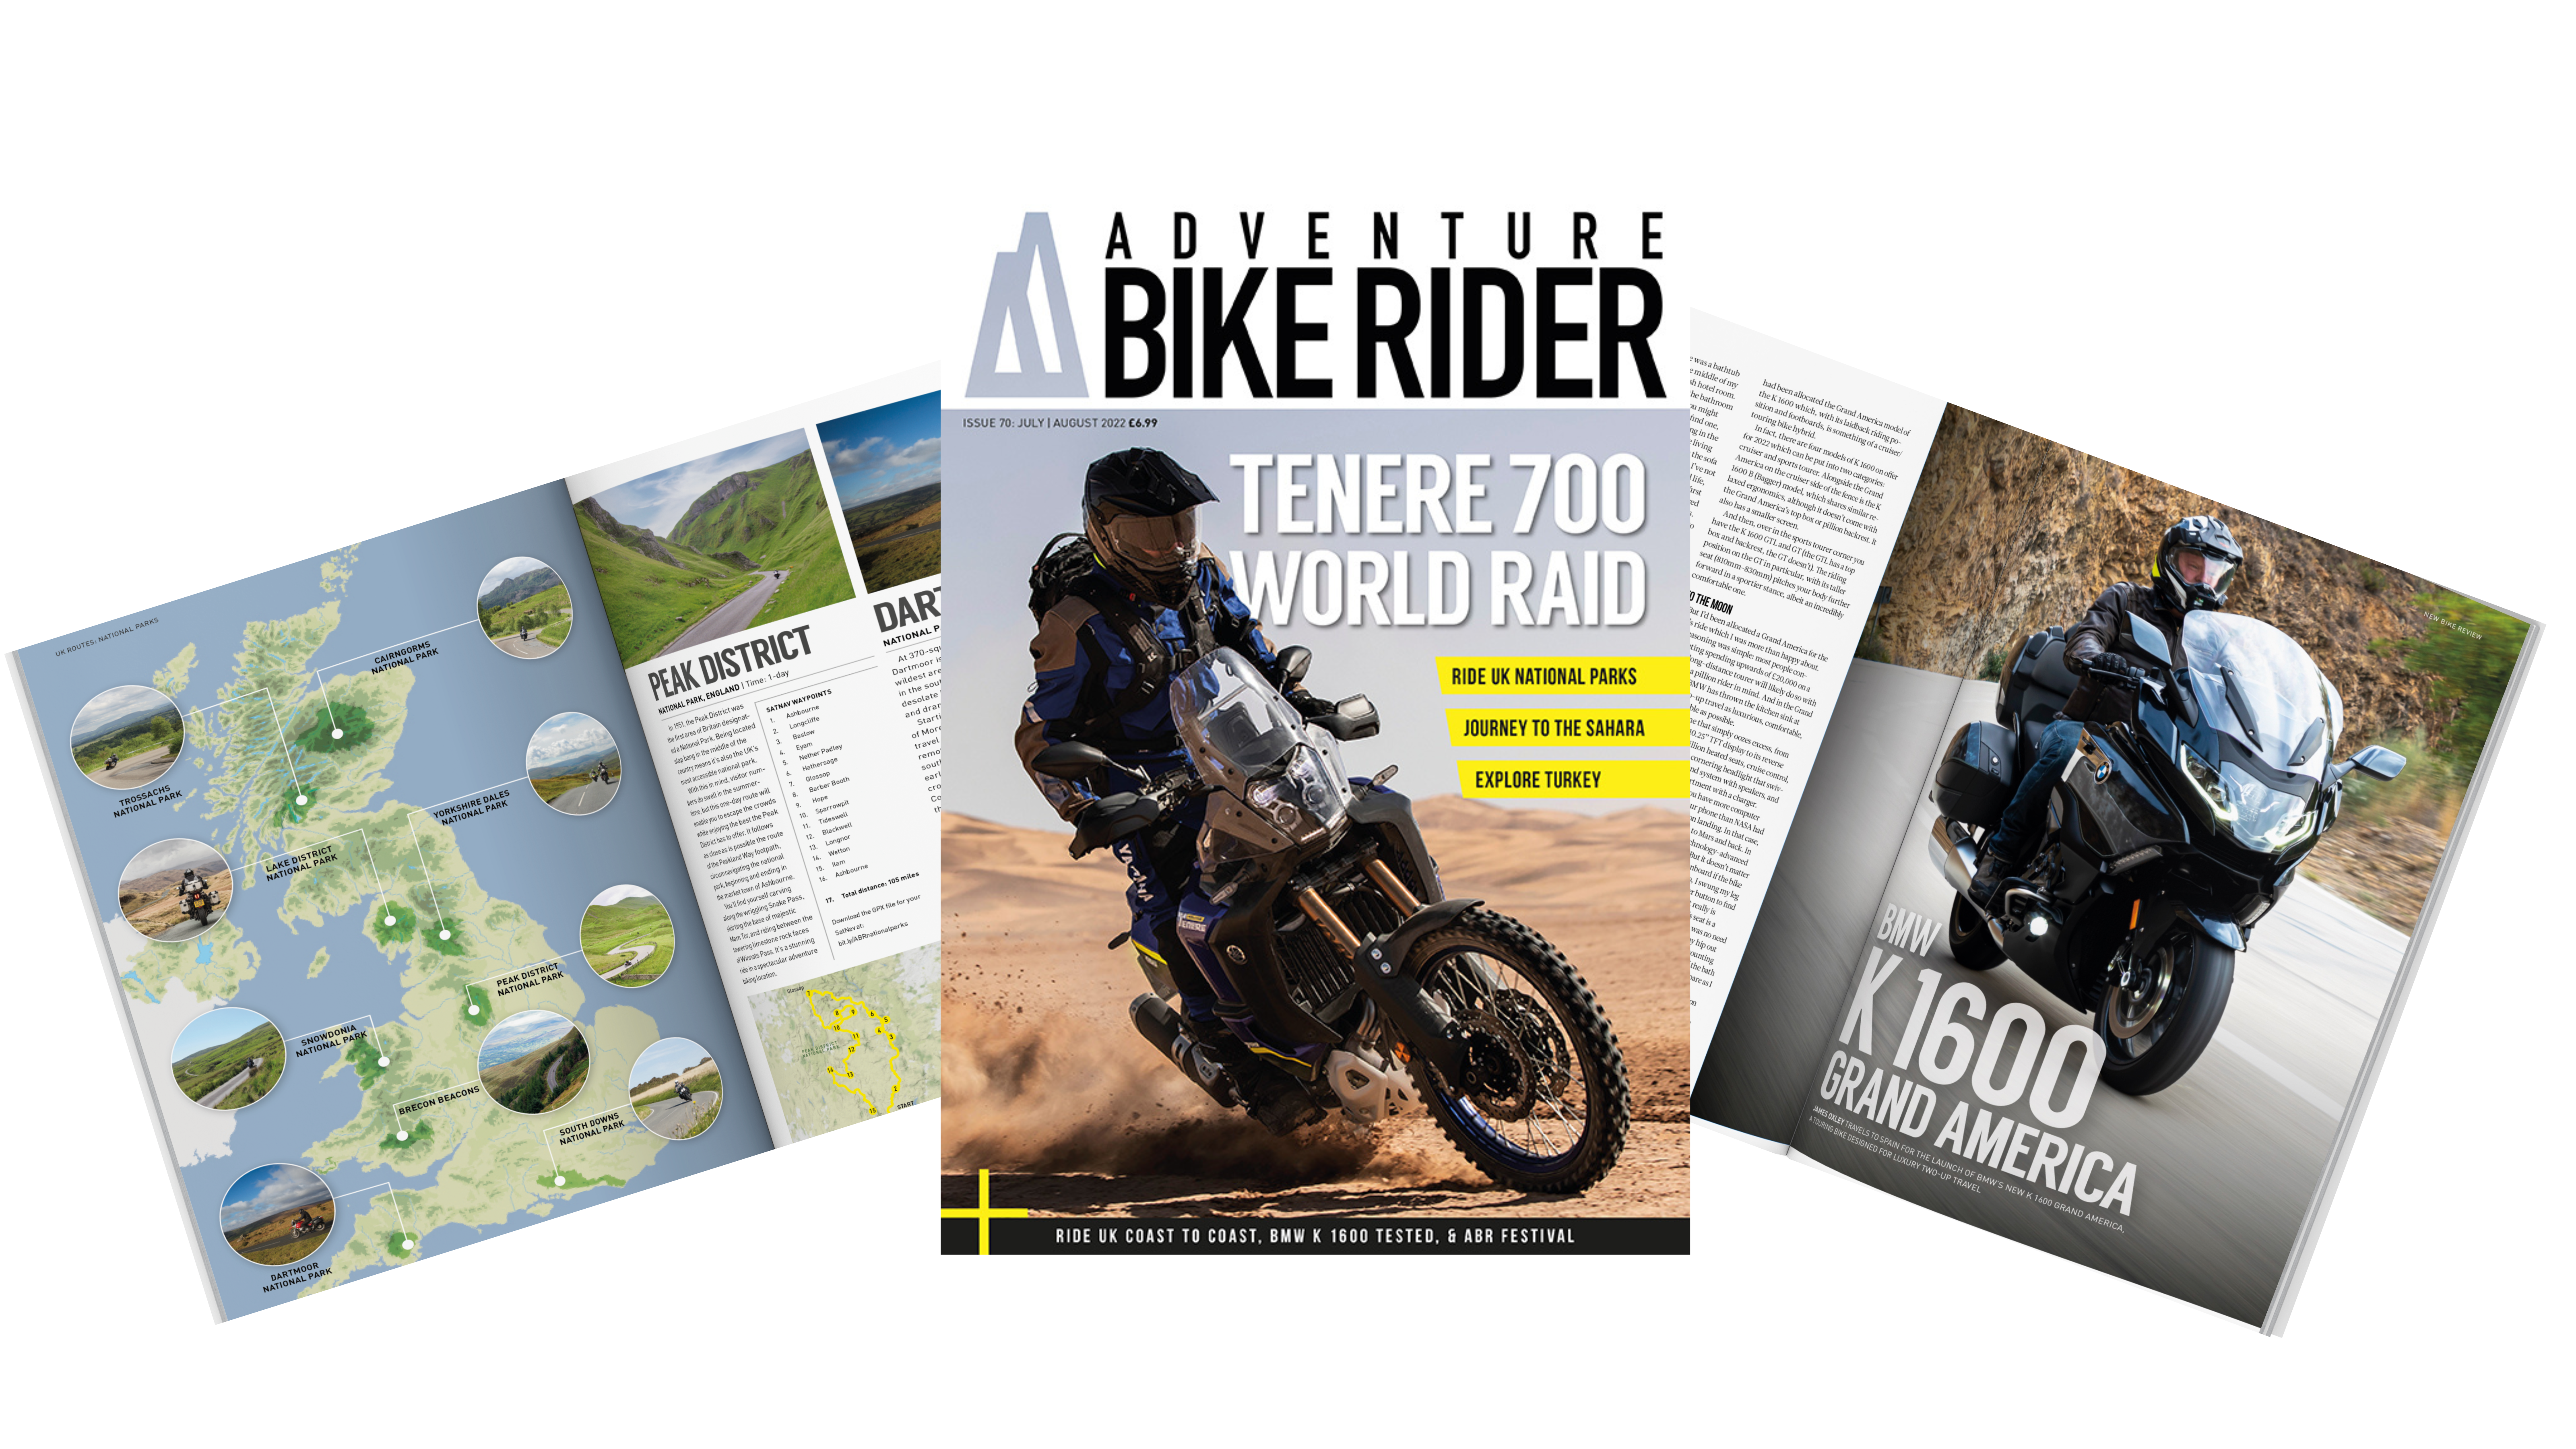 Issue 70 of Adventure Bike Rider magazine